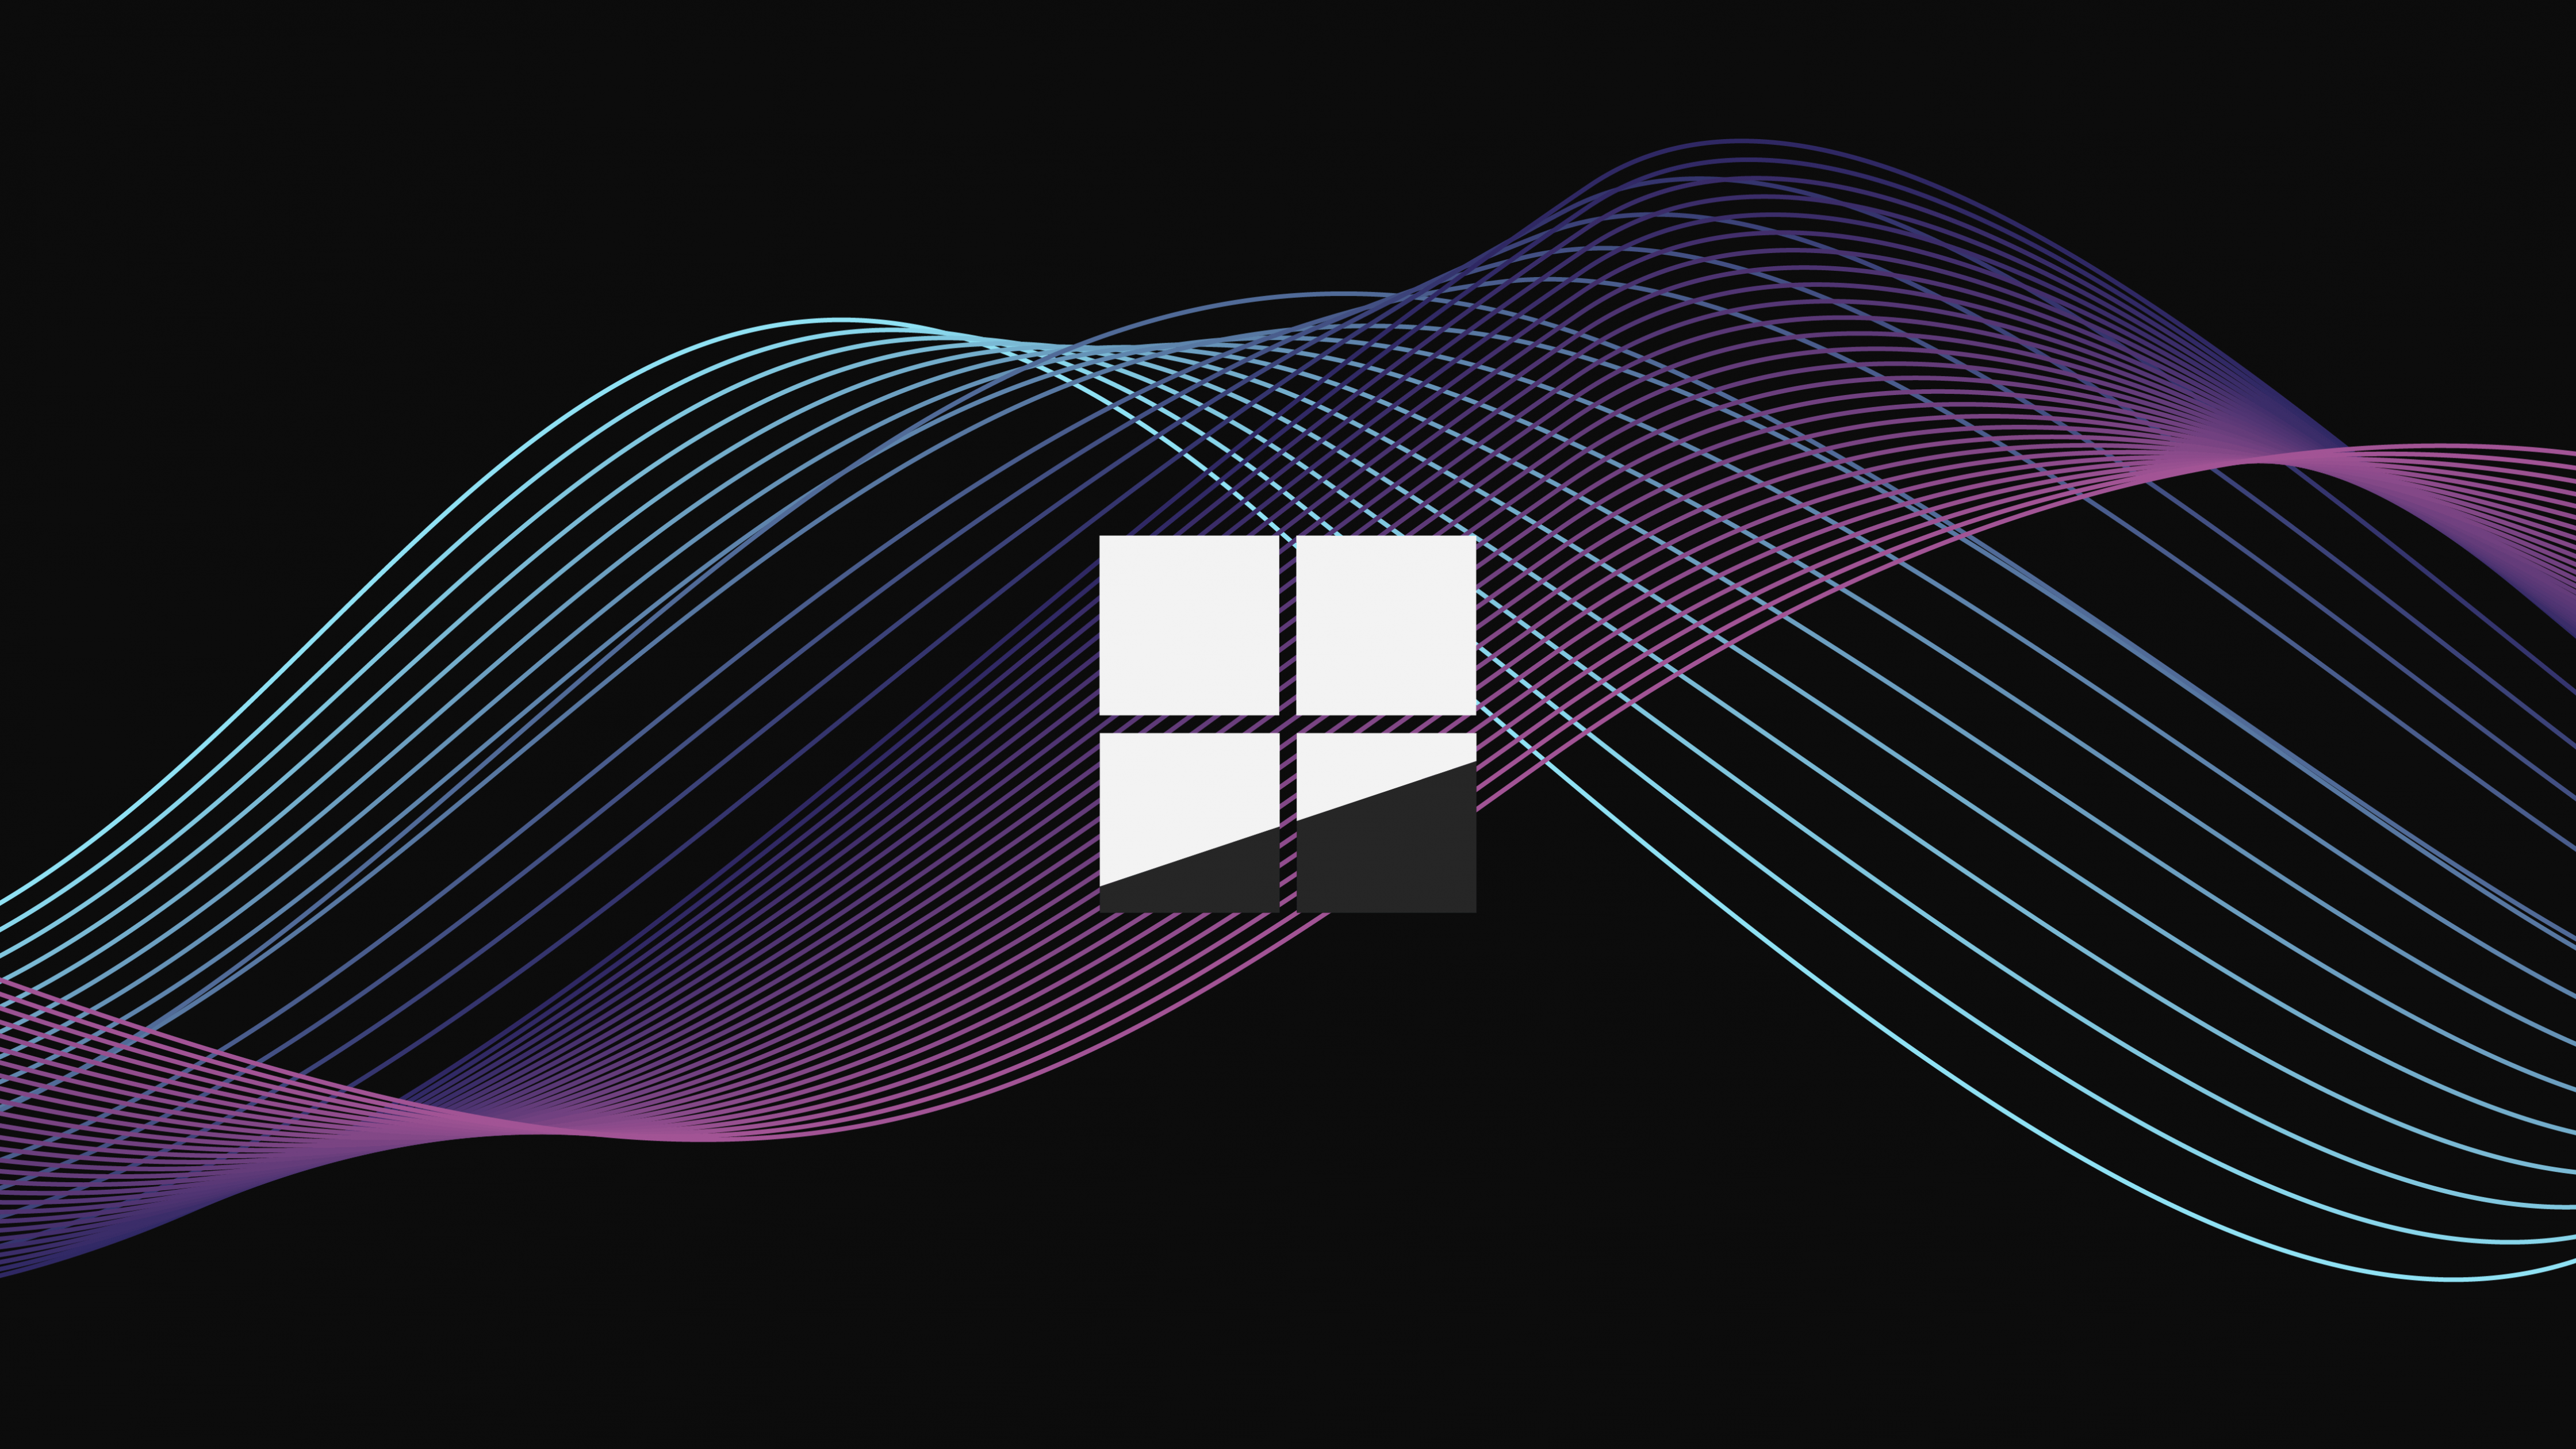 Microsoft Windows Wallpaper 4K, Logo, Minimal, Waves, Dark background, Purple, Technology